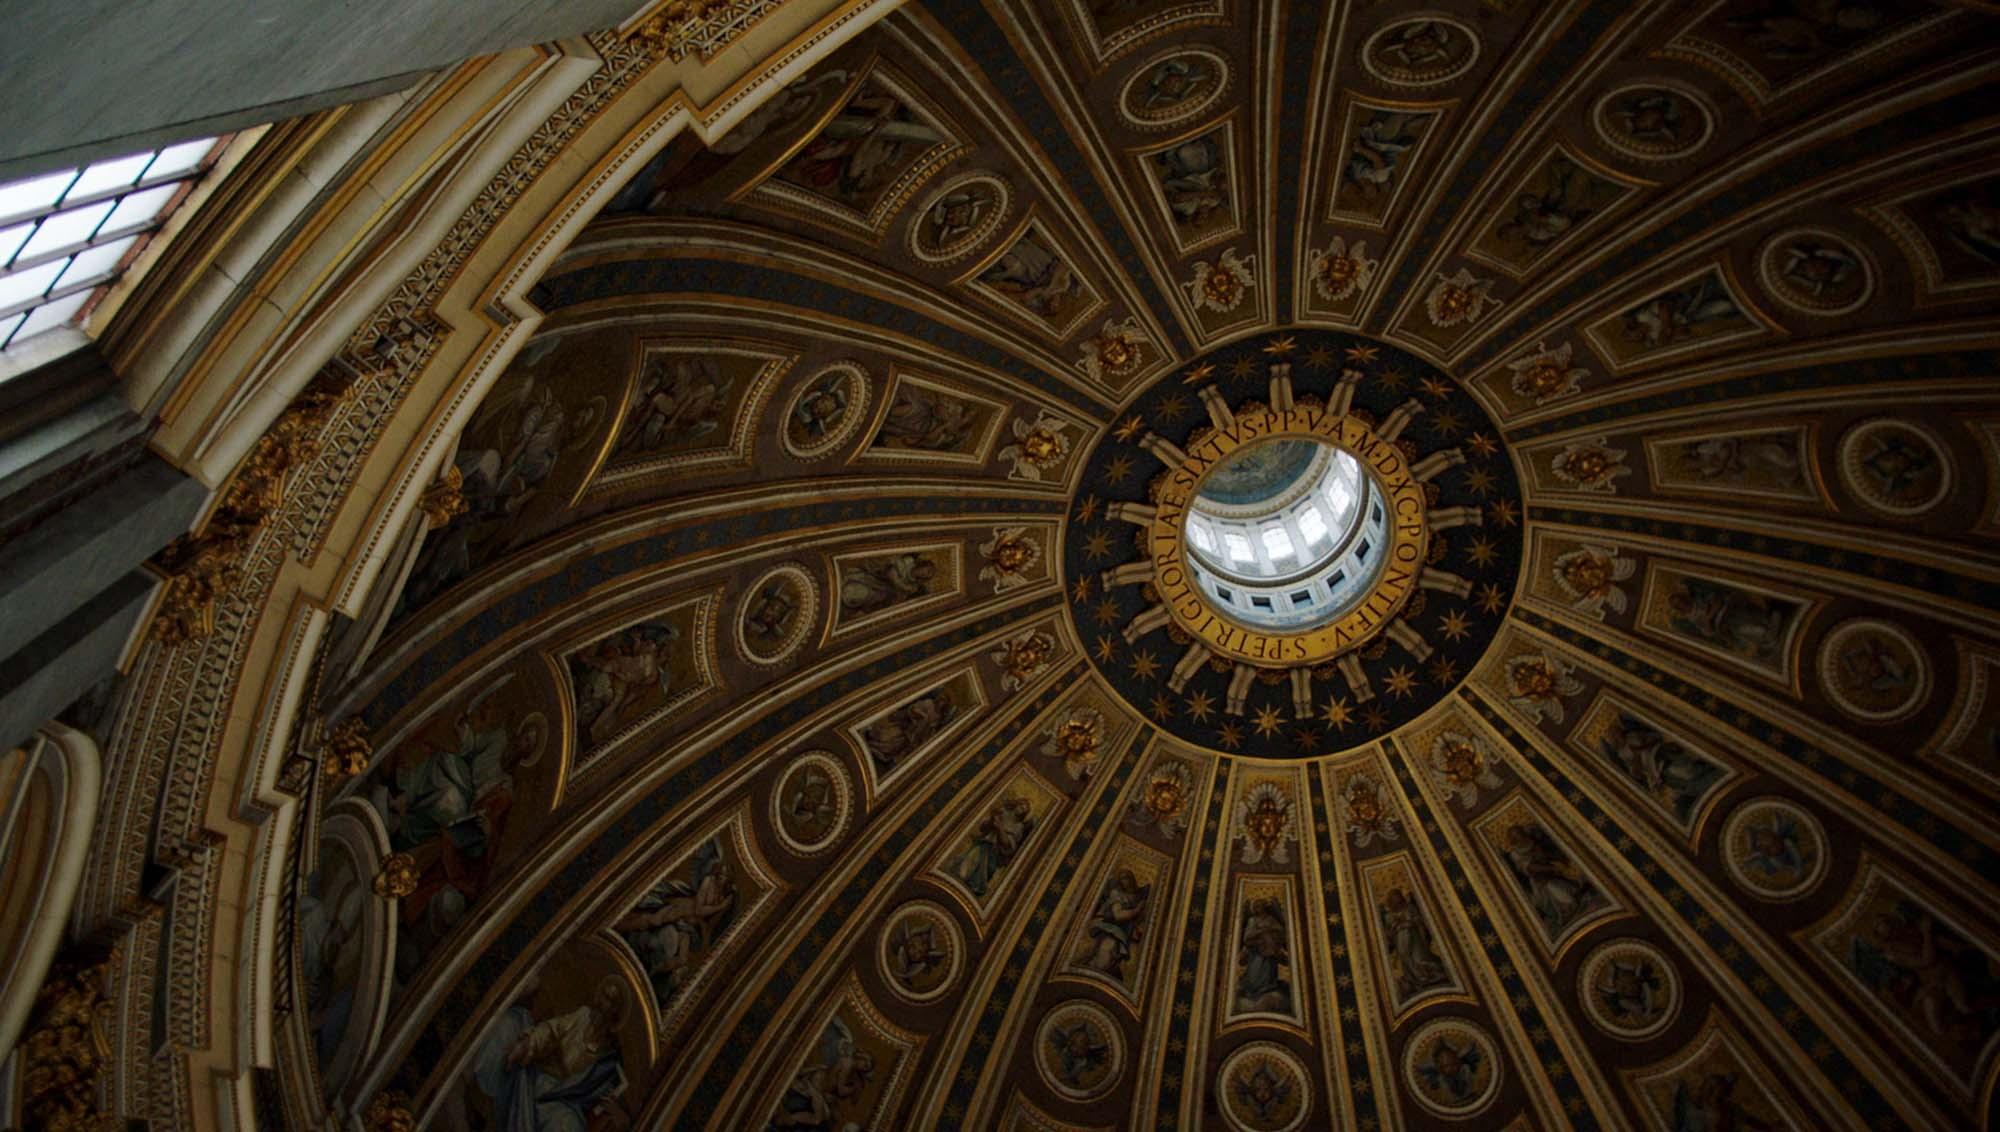 Dome inside St Peter’s Basilica, Vatican City, Rome